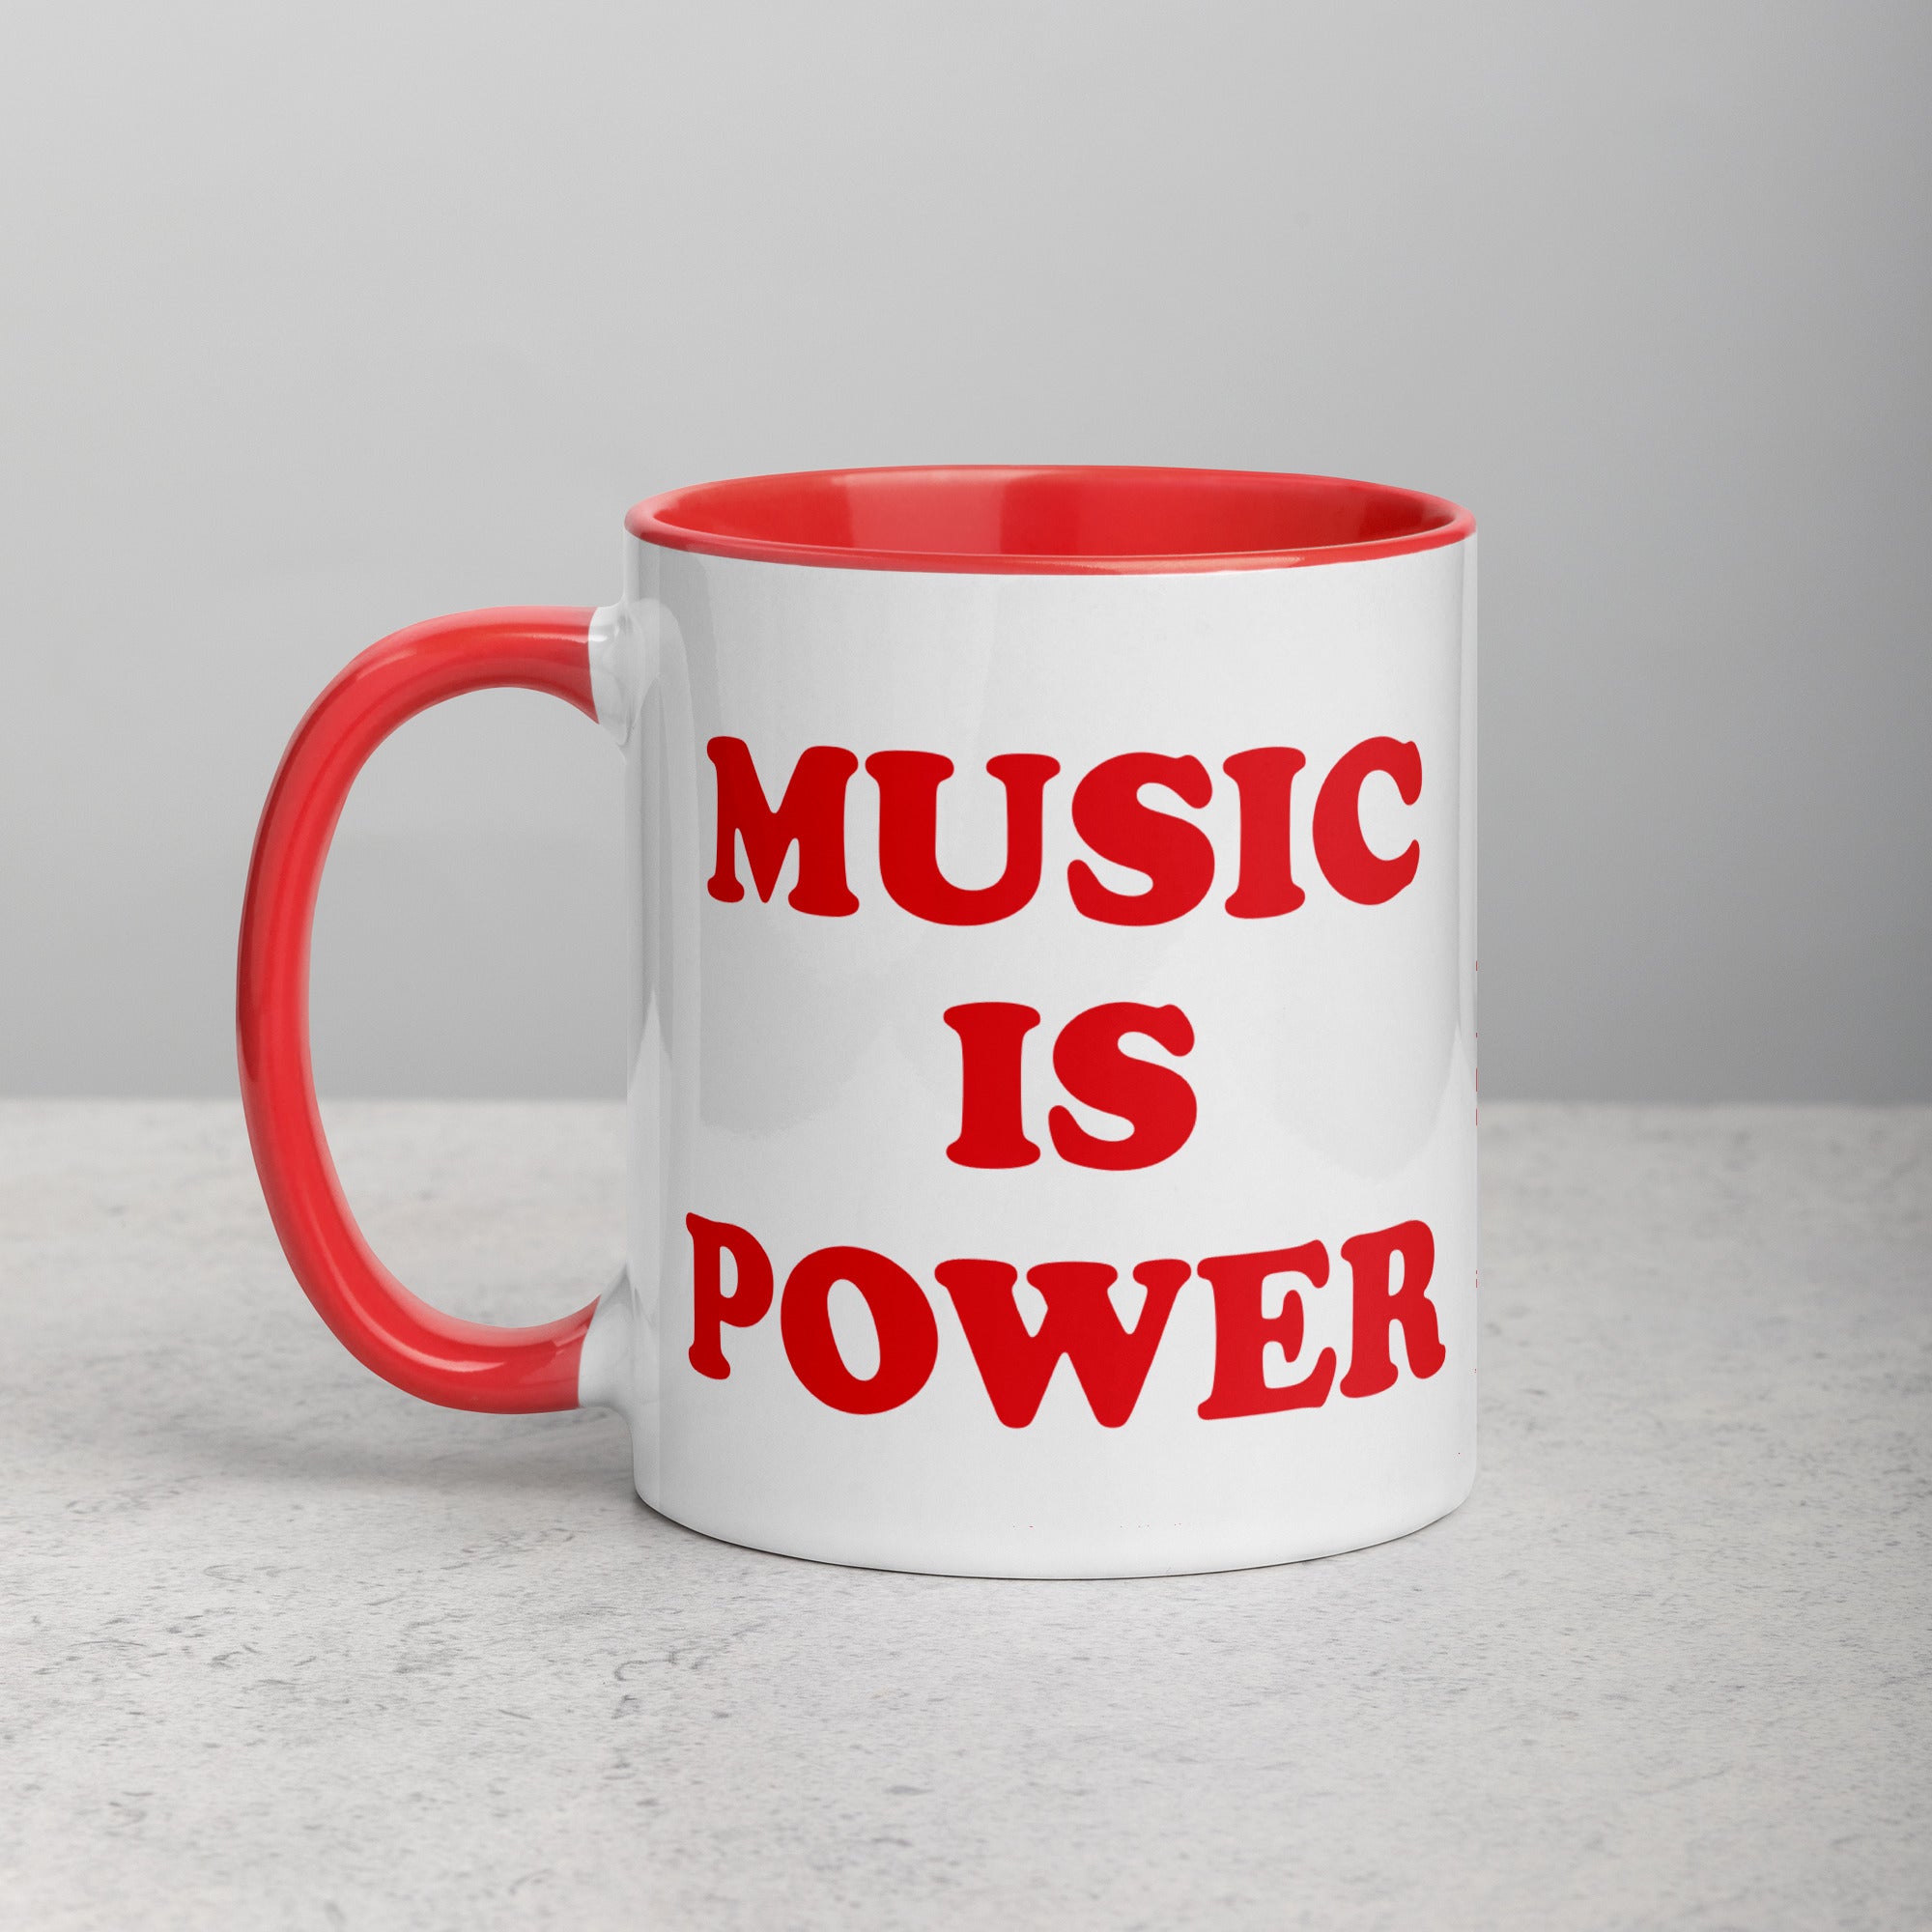 MUSIC IS POWER 印花马克杯 - 红色